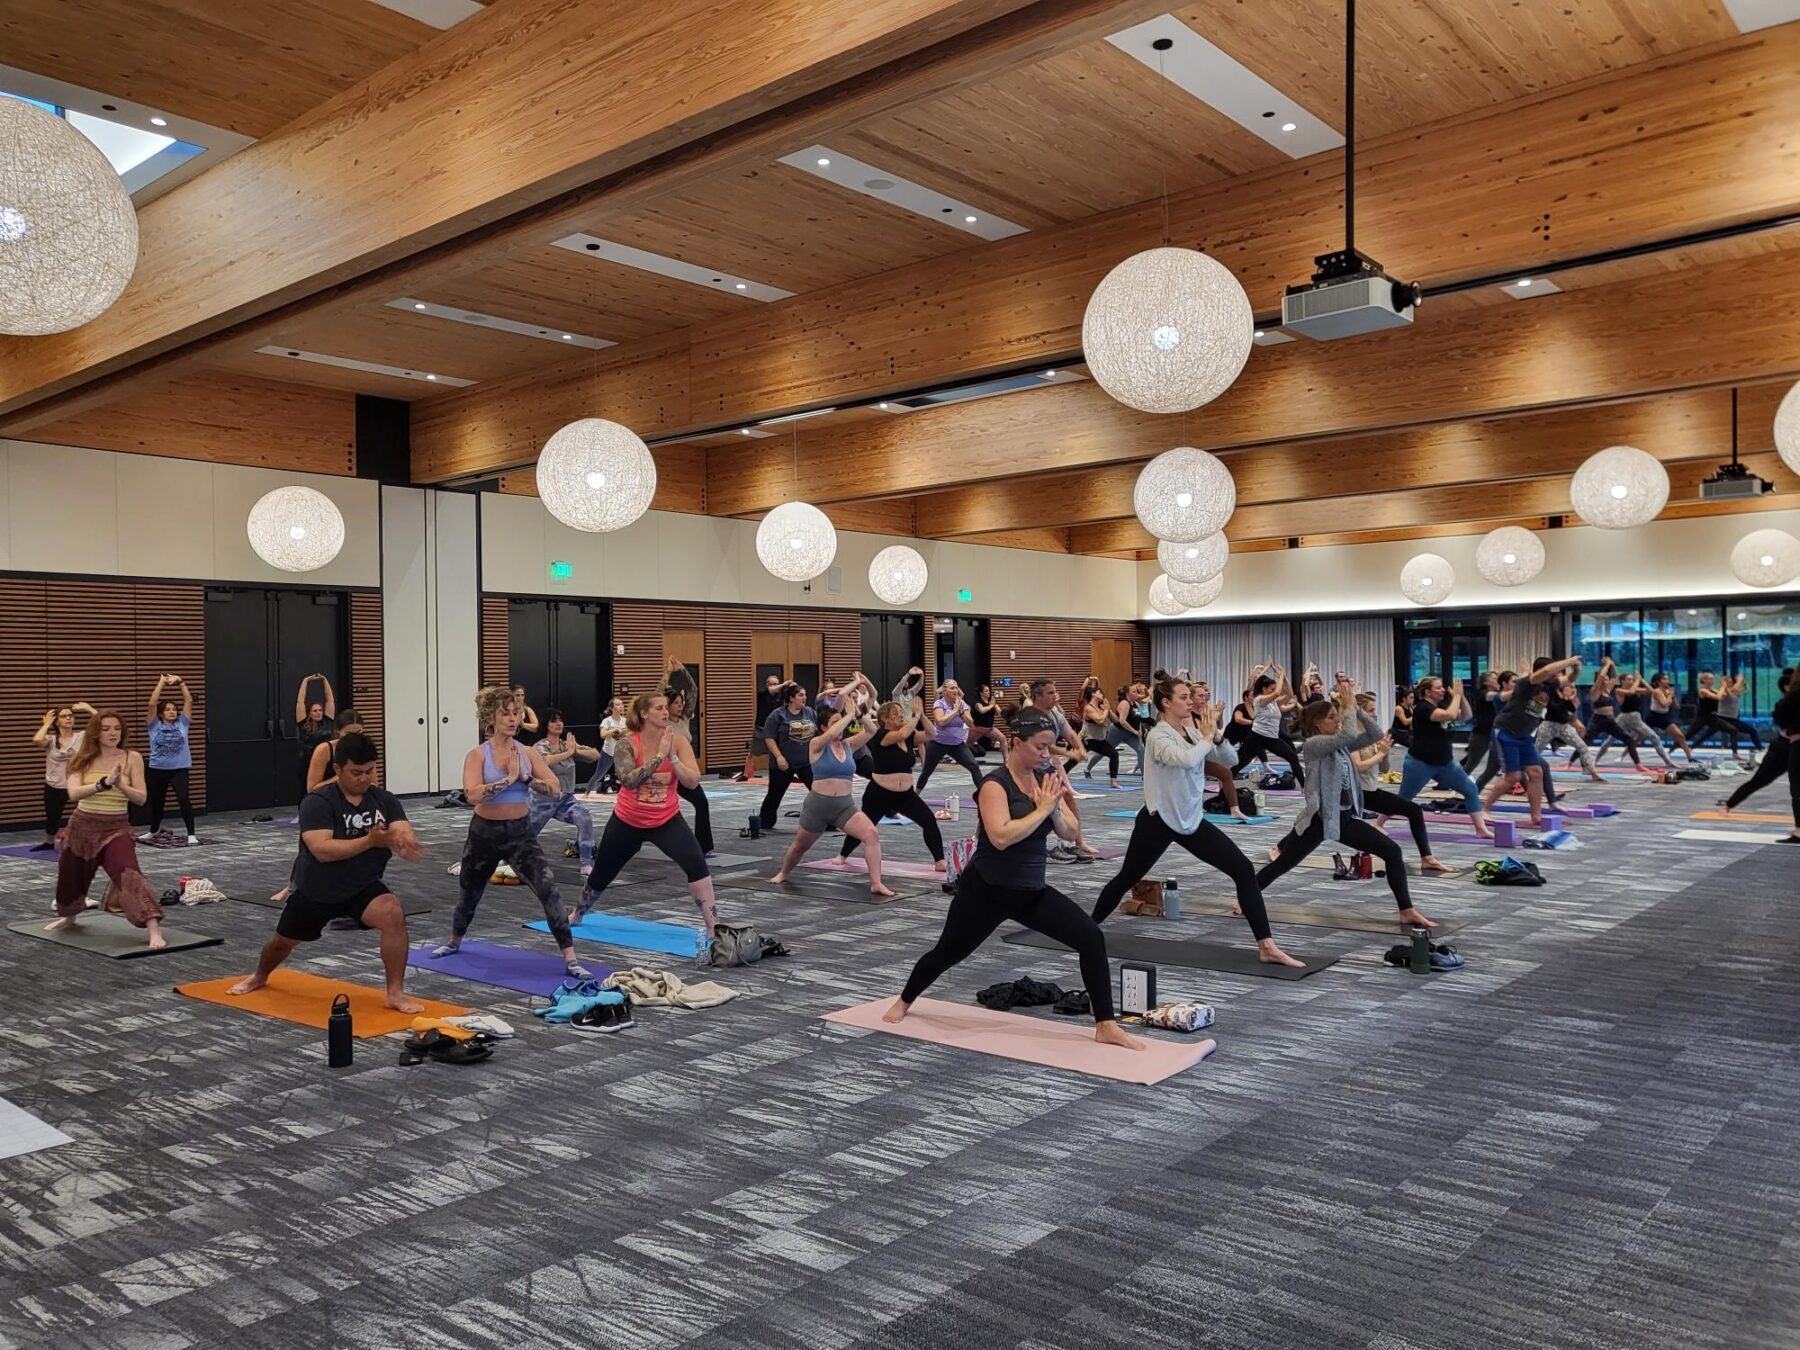 A yoga class underway at the Bonnet Springs Park Event Center ballroom.